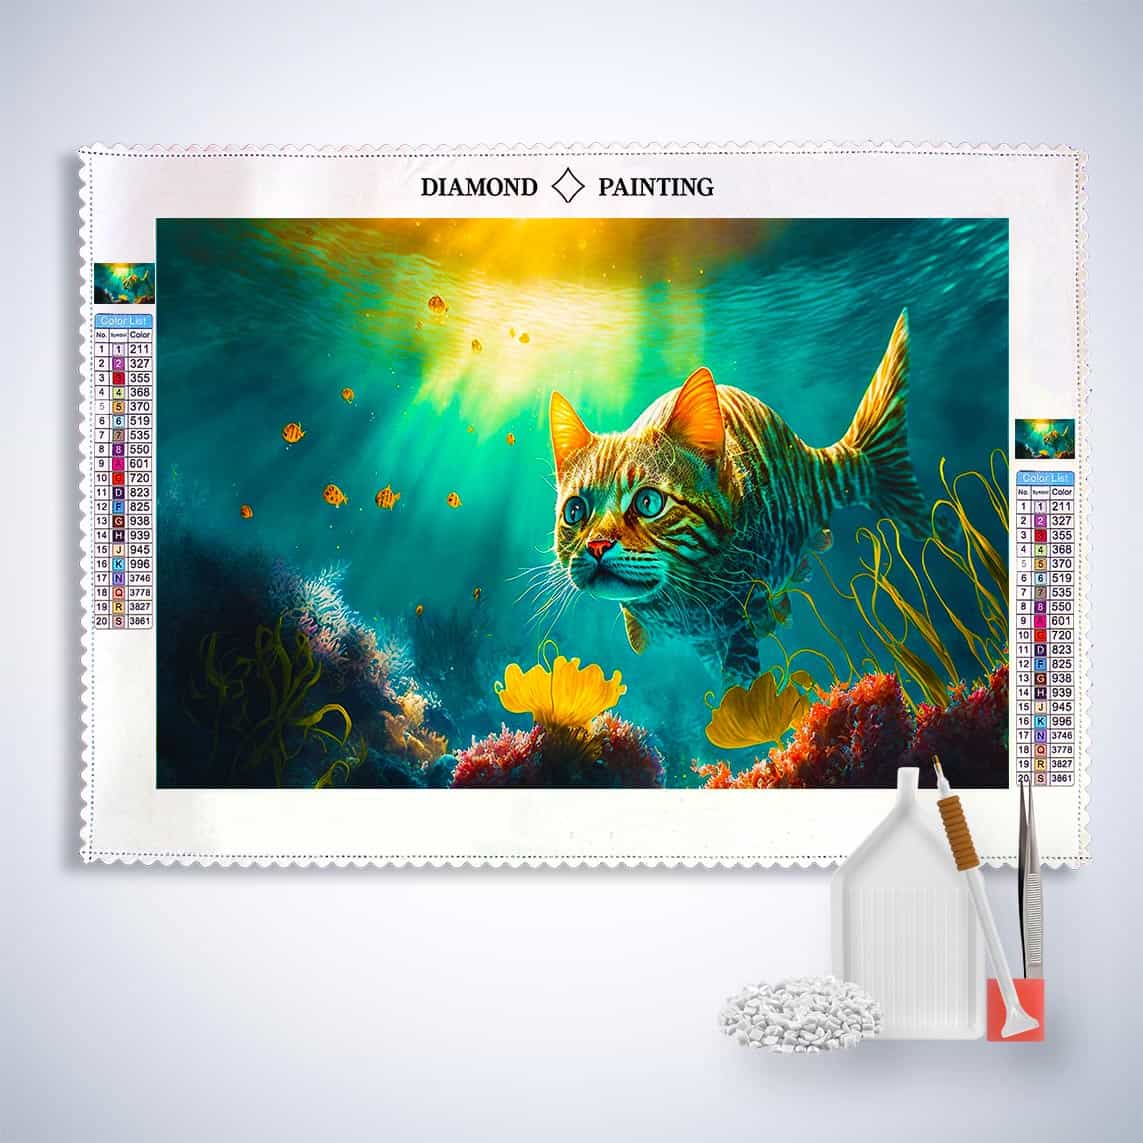 Diamond Painting - Katzenfisch - gedruckt in Ultra-HD - Fische, Horizontal, Katze, Tiere